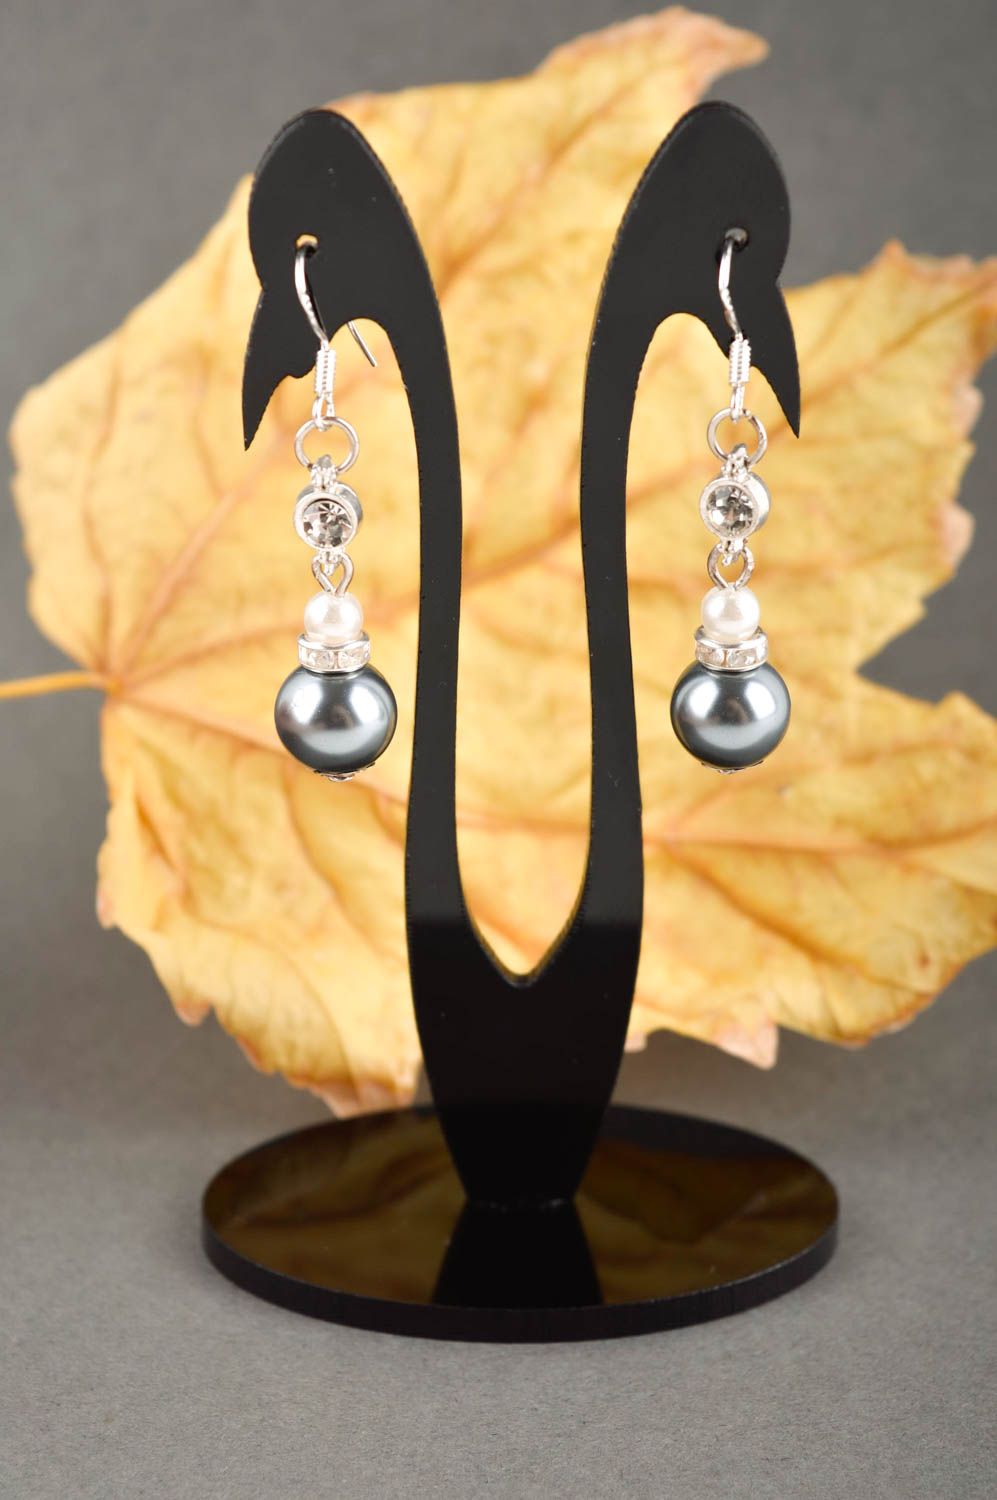 Handmade earrings with charms stylish earrings designer jewelry women accessory photo 1